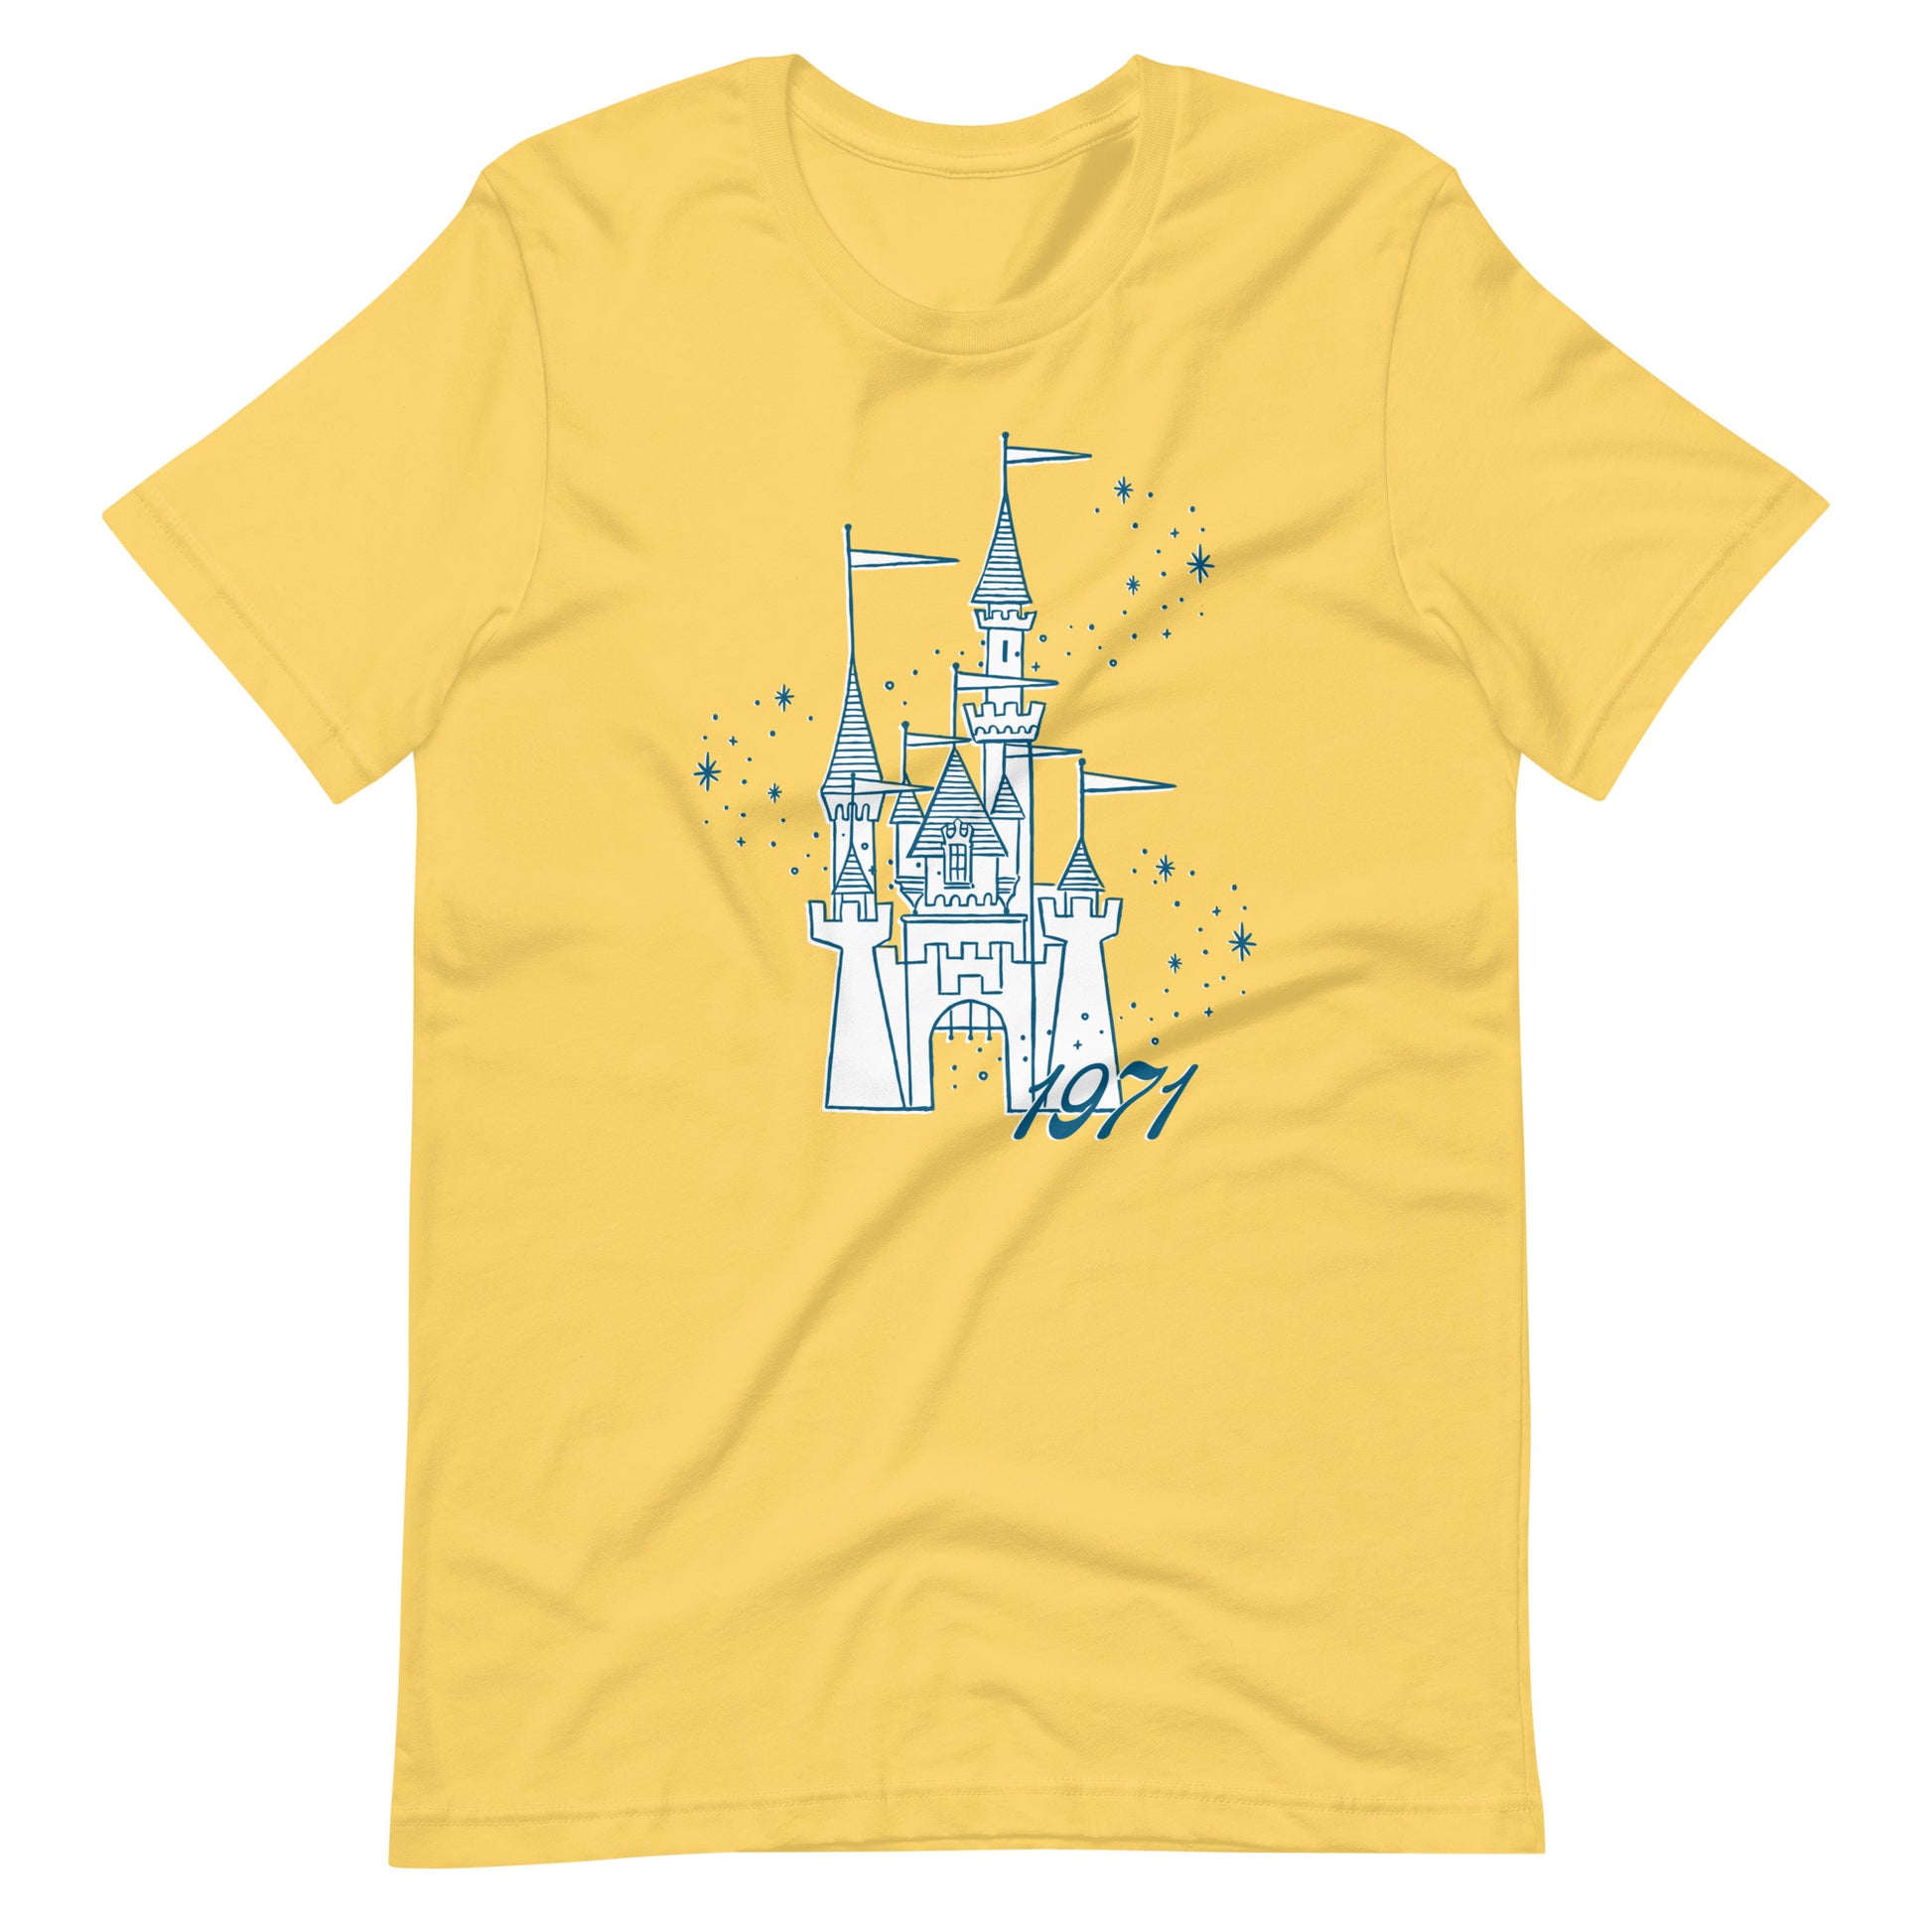 Disney Adult Shirt - Retro Walt Disney World Logo - YELLOW